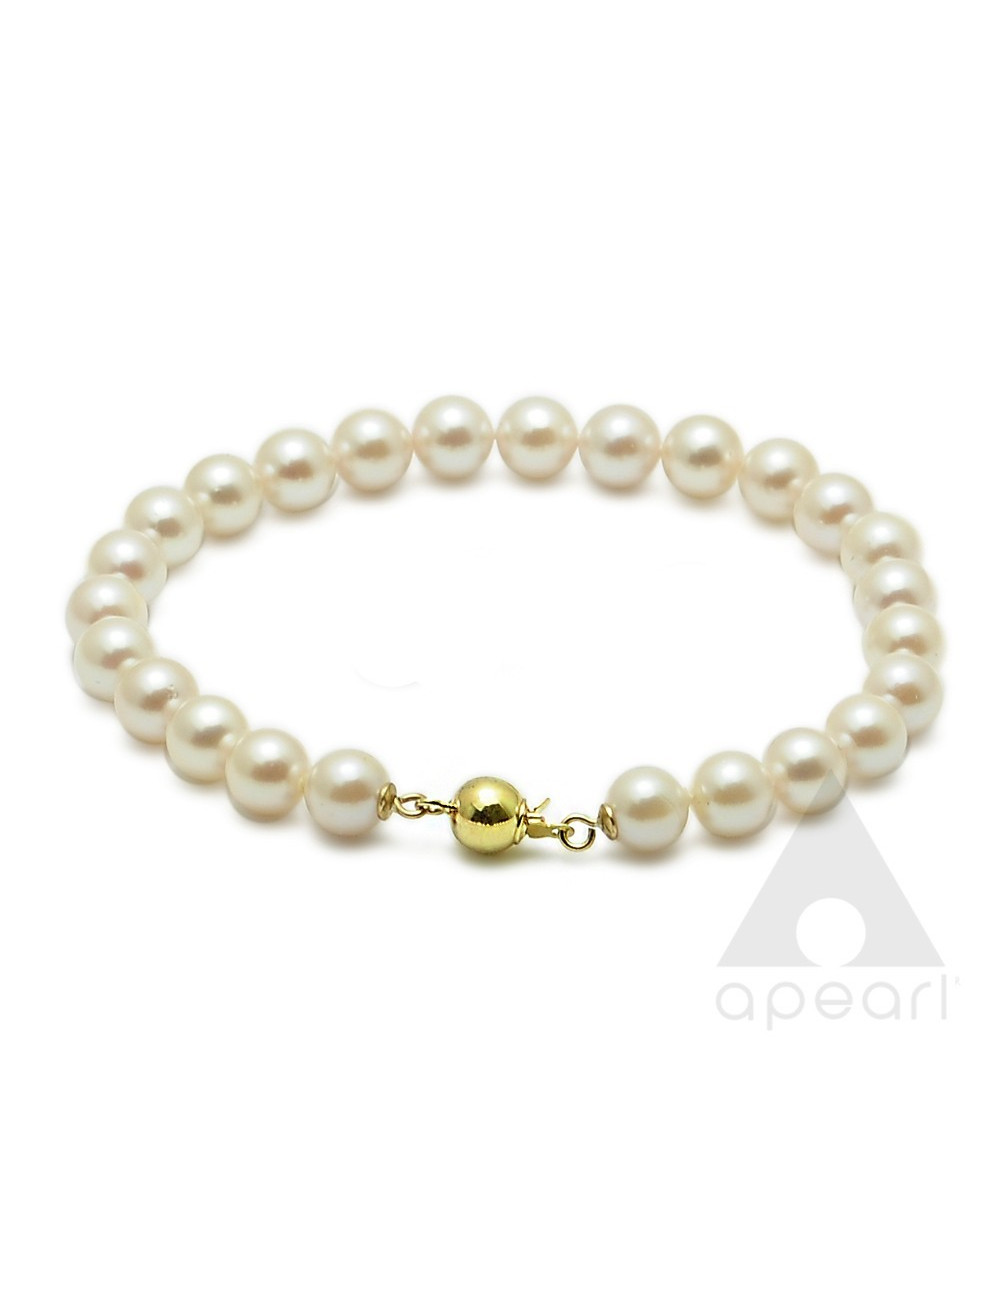 Medium Akoya pearl bracelet with gold ball clasp Bm657G+